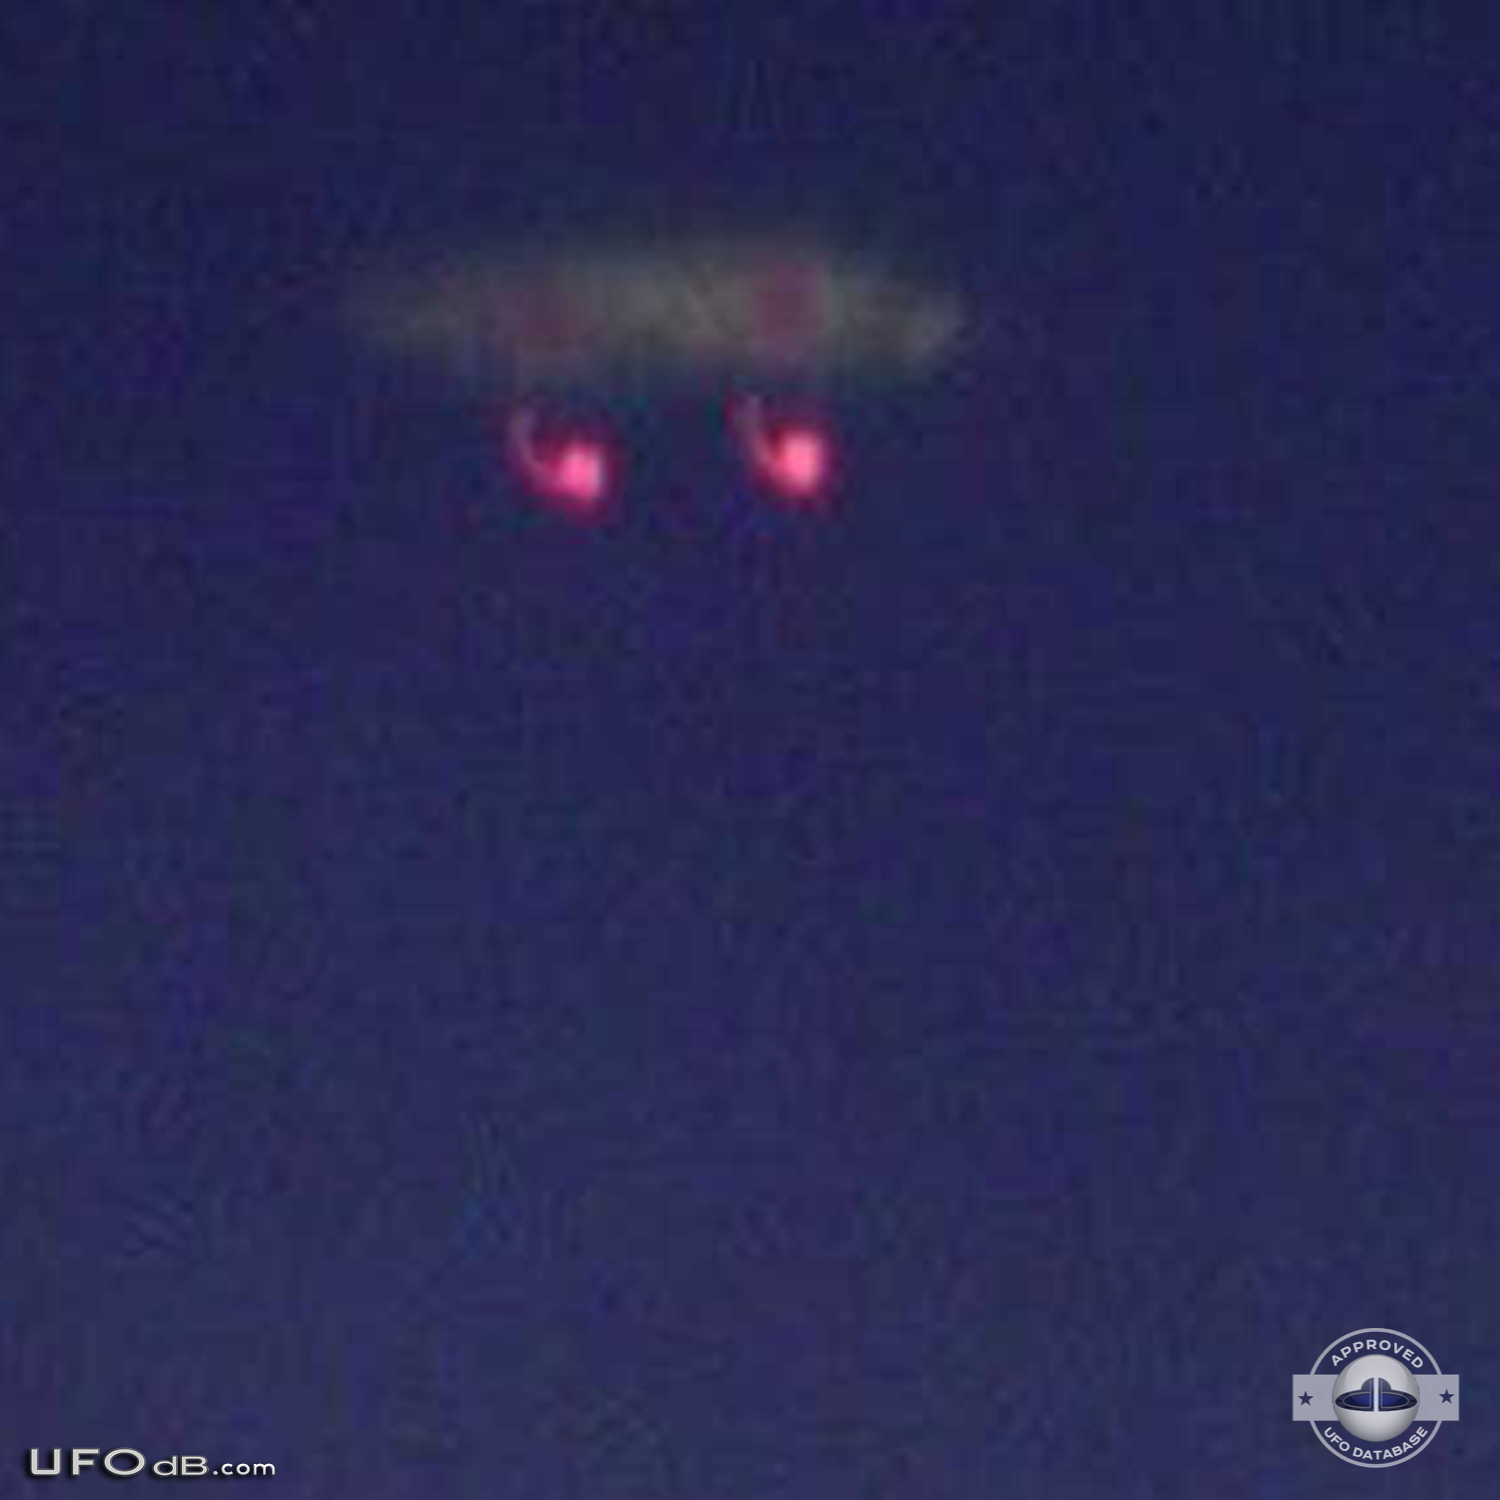 Strange Saucer UFO over Bruges Belgium caugh on picture in 2005 UFO Picture #434-4